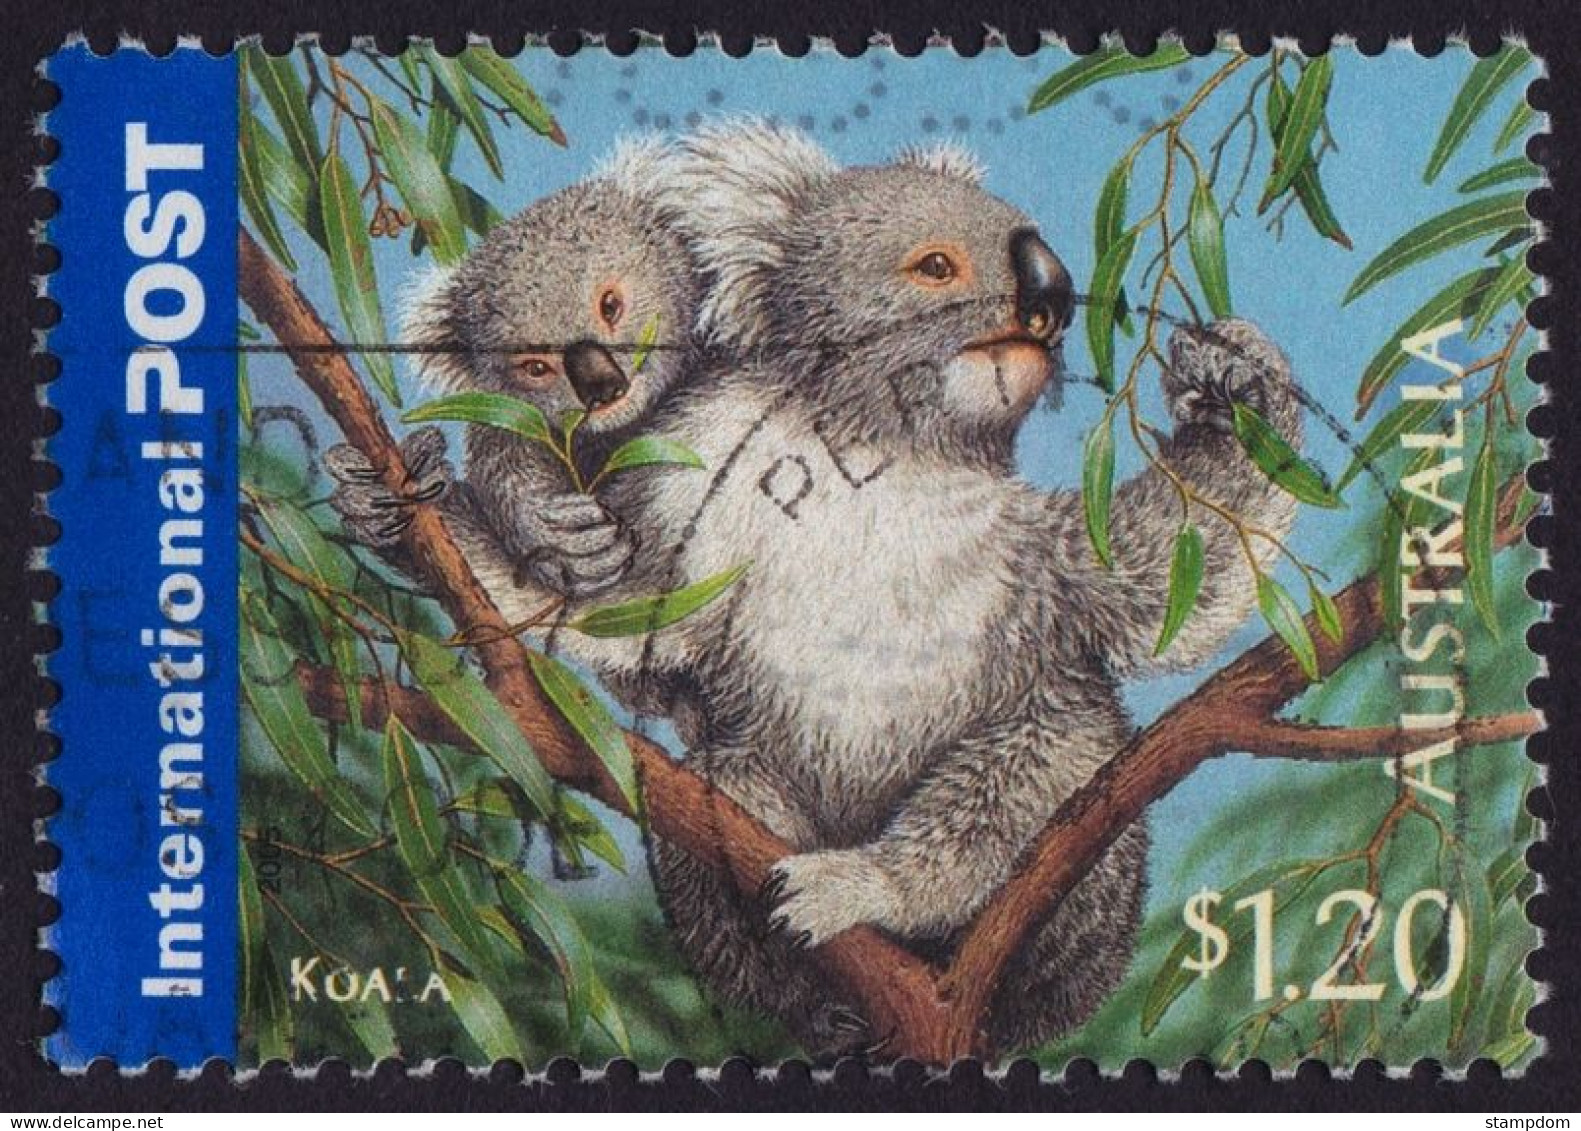 AUSTRALIA  2005 Animals Int'l Post $1.20 Koala Sc#2388 USED @O414 - Gebraucht